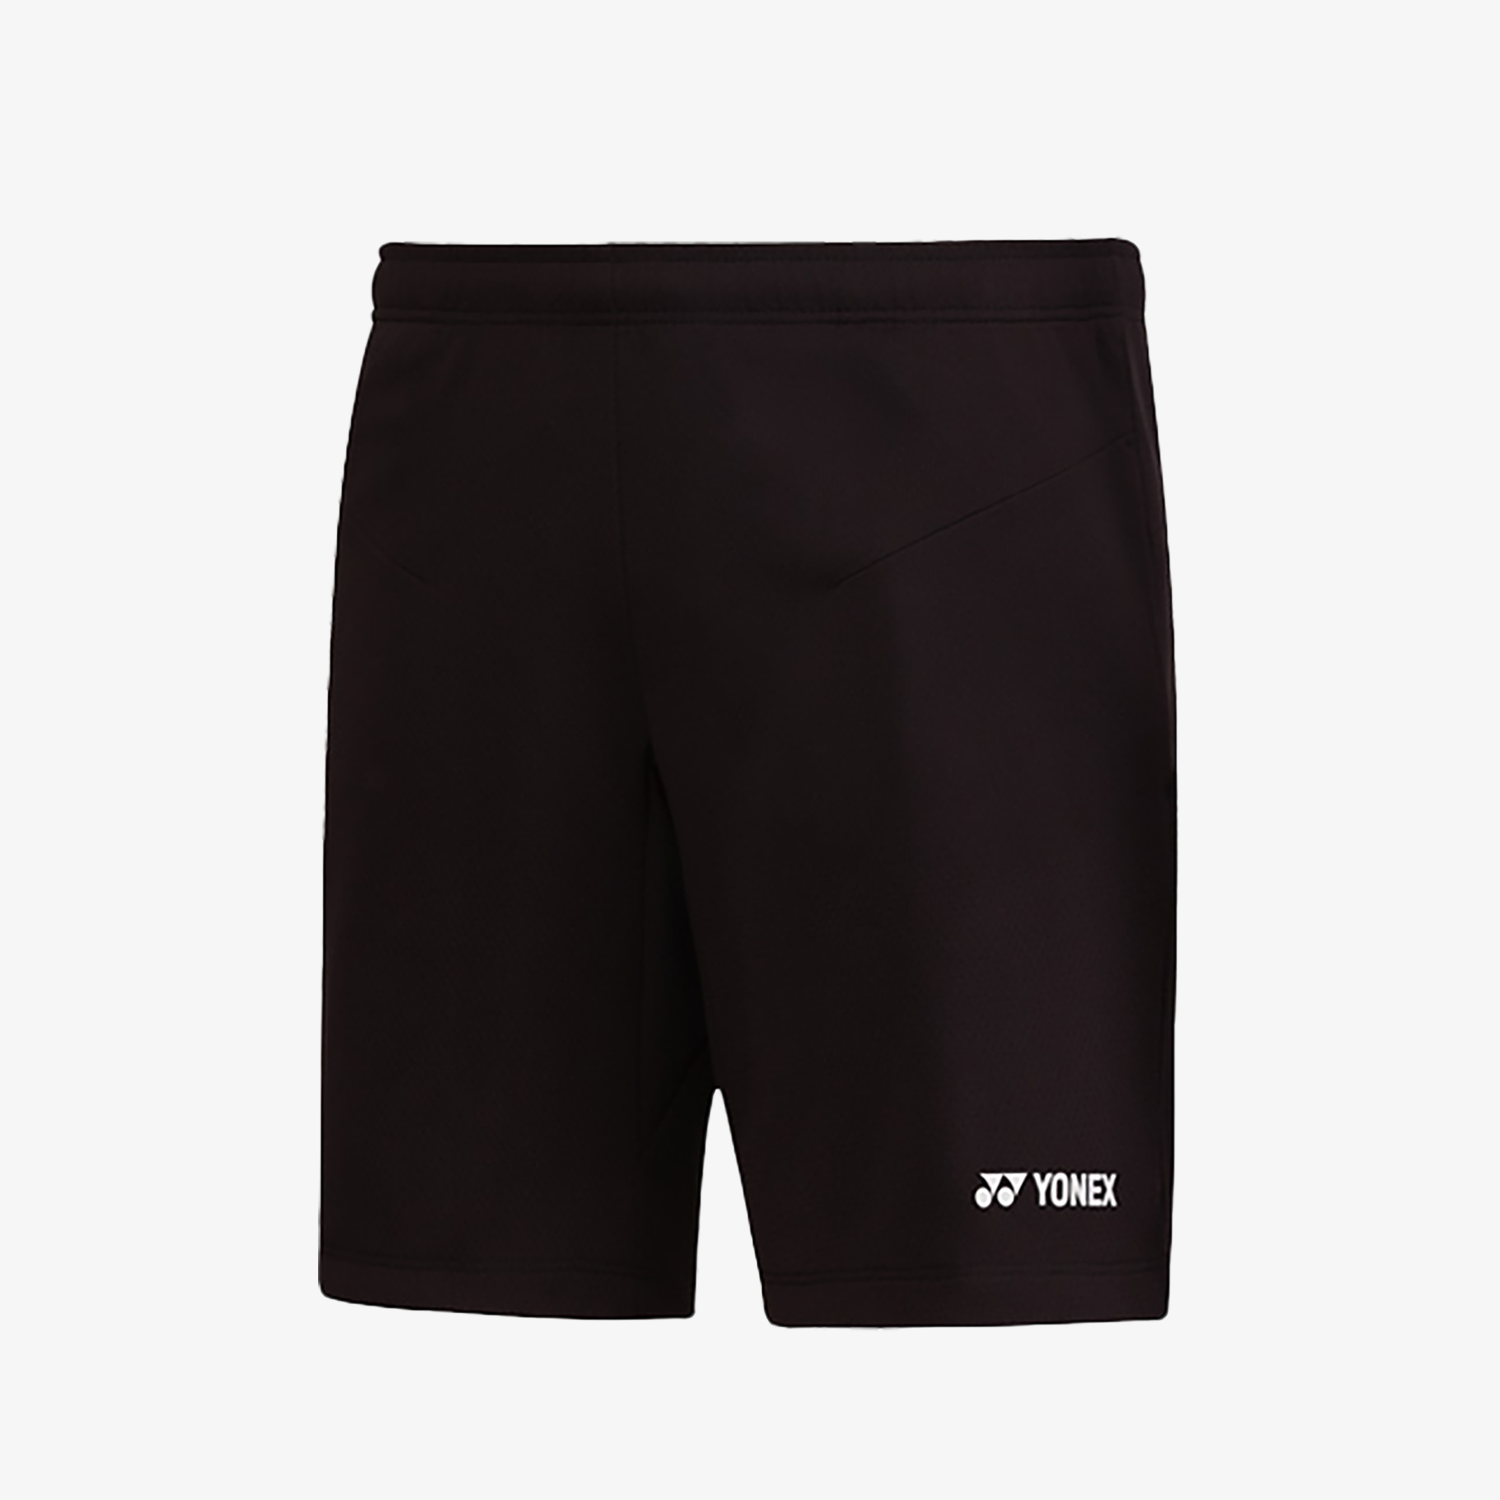 Yonex Men's Woven Shorts 231PH001M (Black)